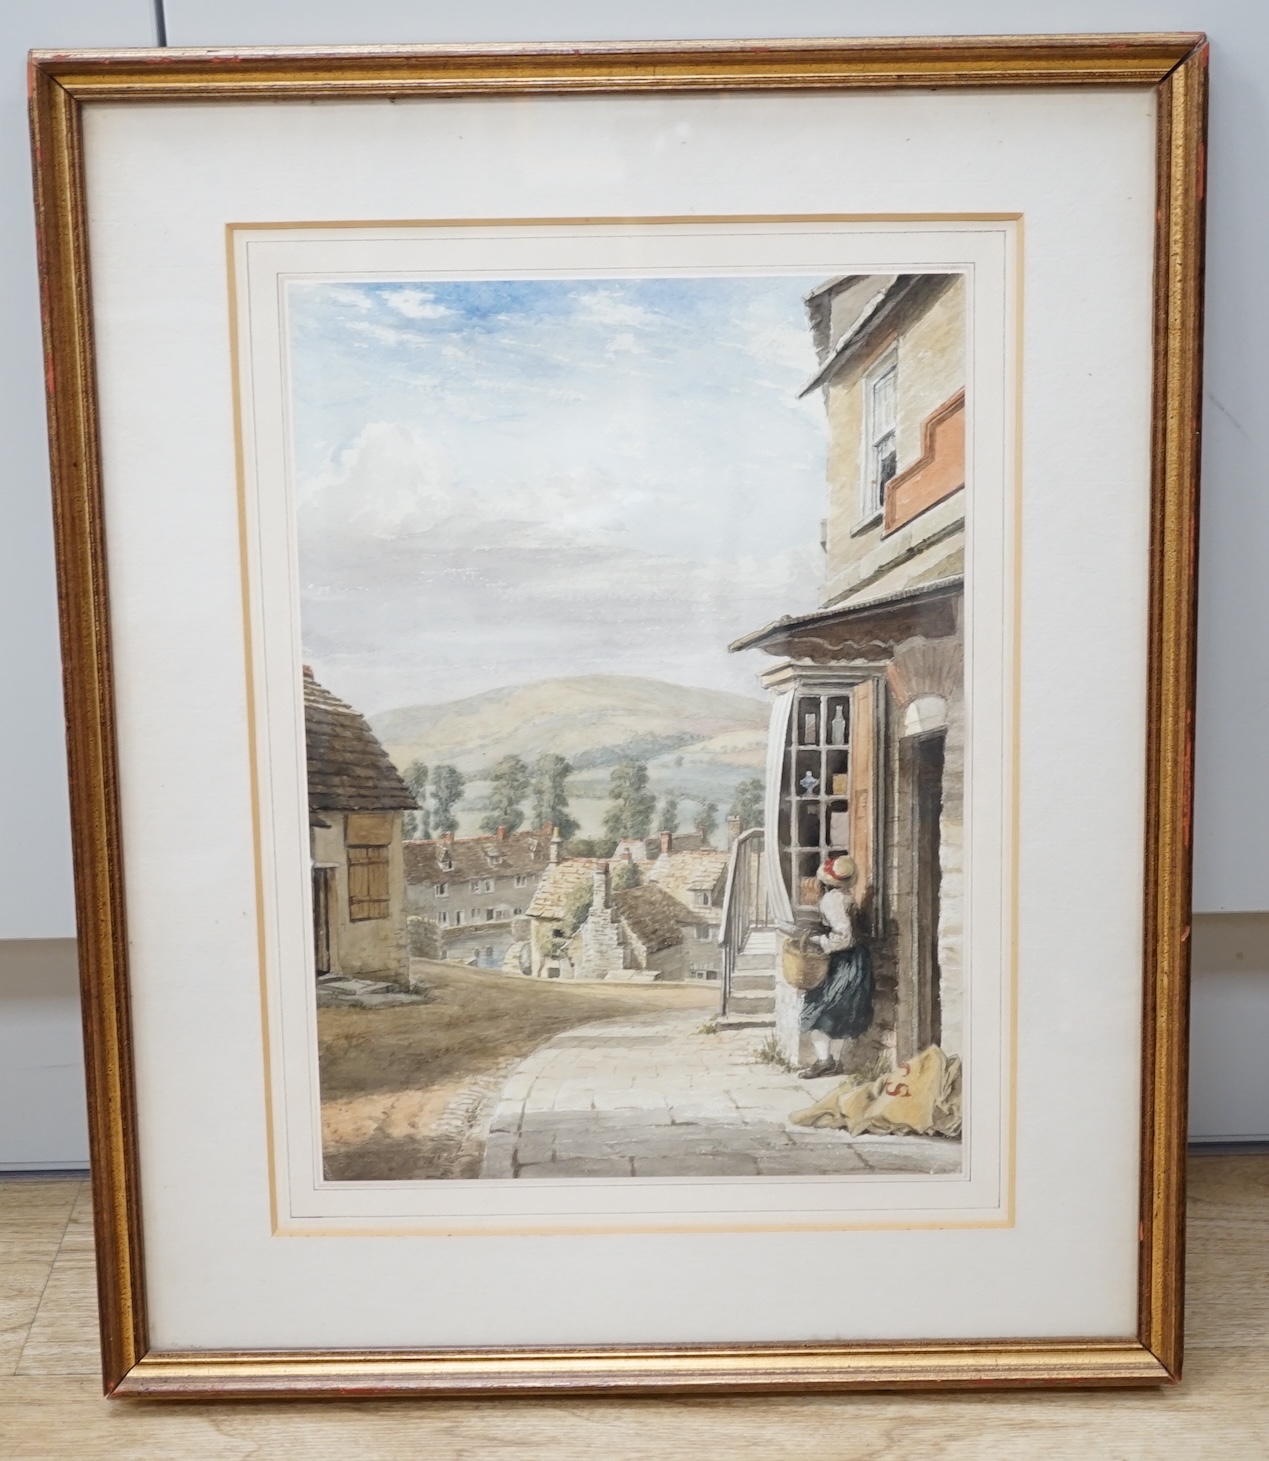 19th century, English School, watercolour, street scene, ‘Swanage, Dorset’, label verso, 35 x 24cm. Condition - fair